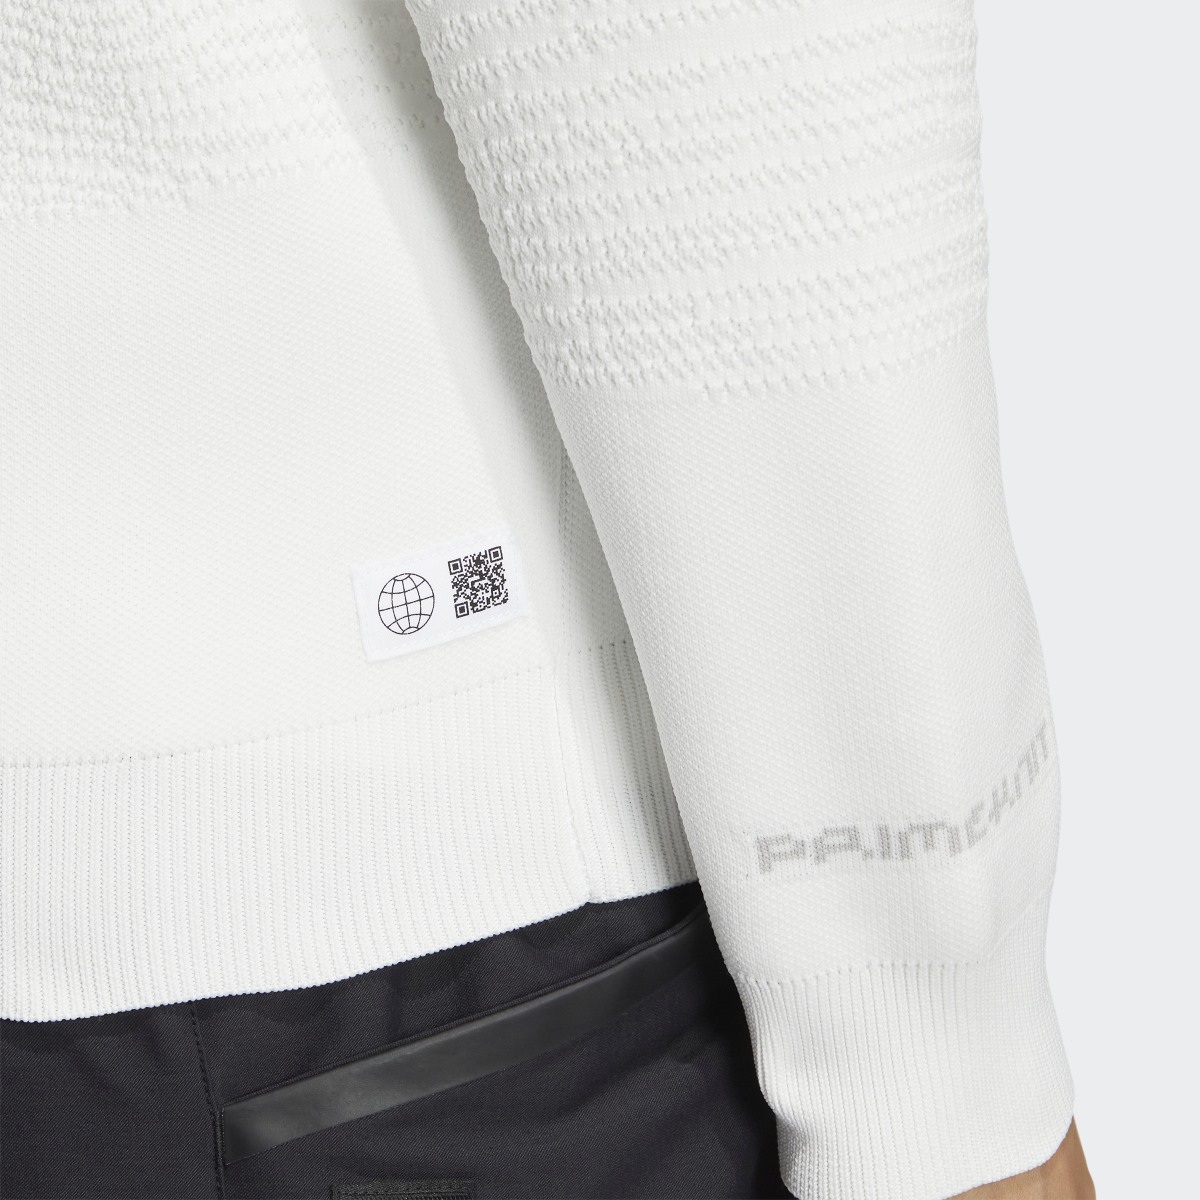 Adidas Made to be Remade Crewneck Sweatshirt. 7